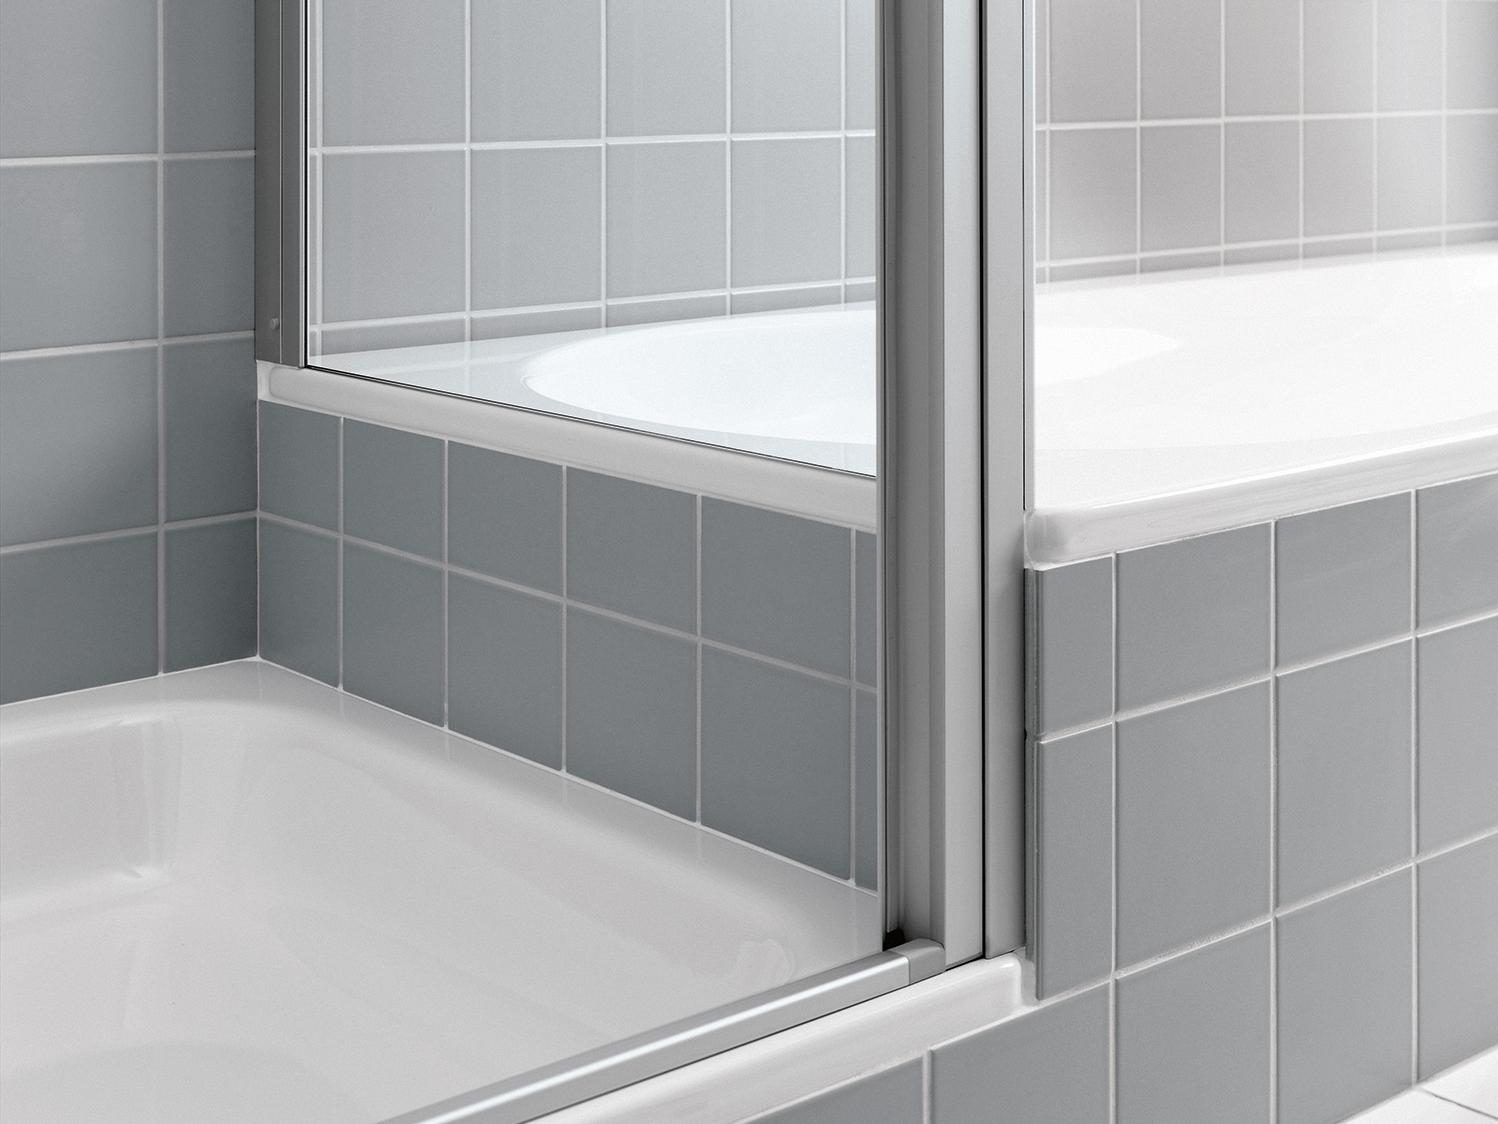 Kermi profile shower enclosure, IBIZA 2000 freely accessible corners